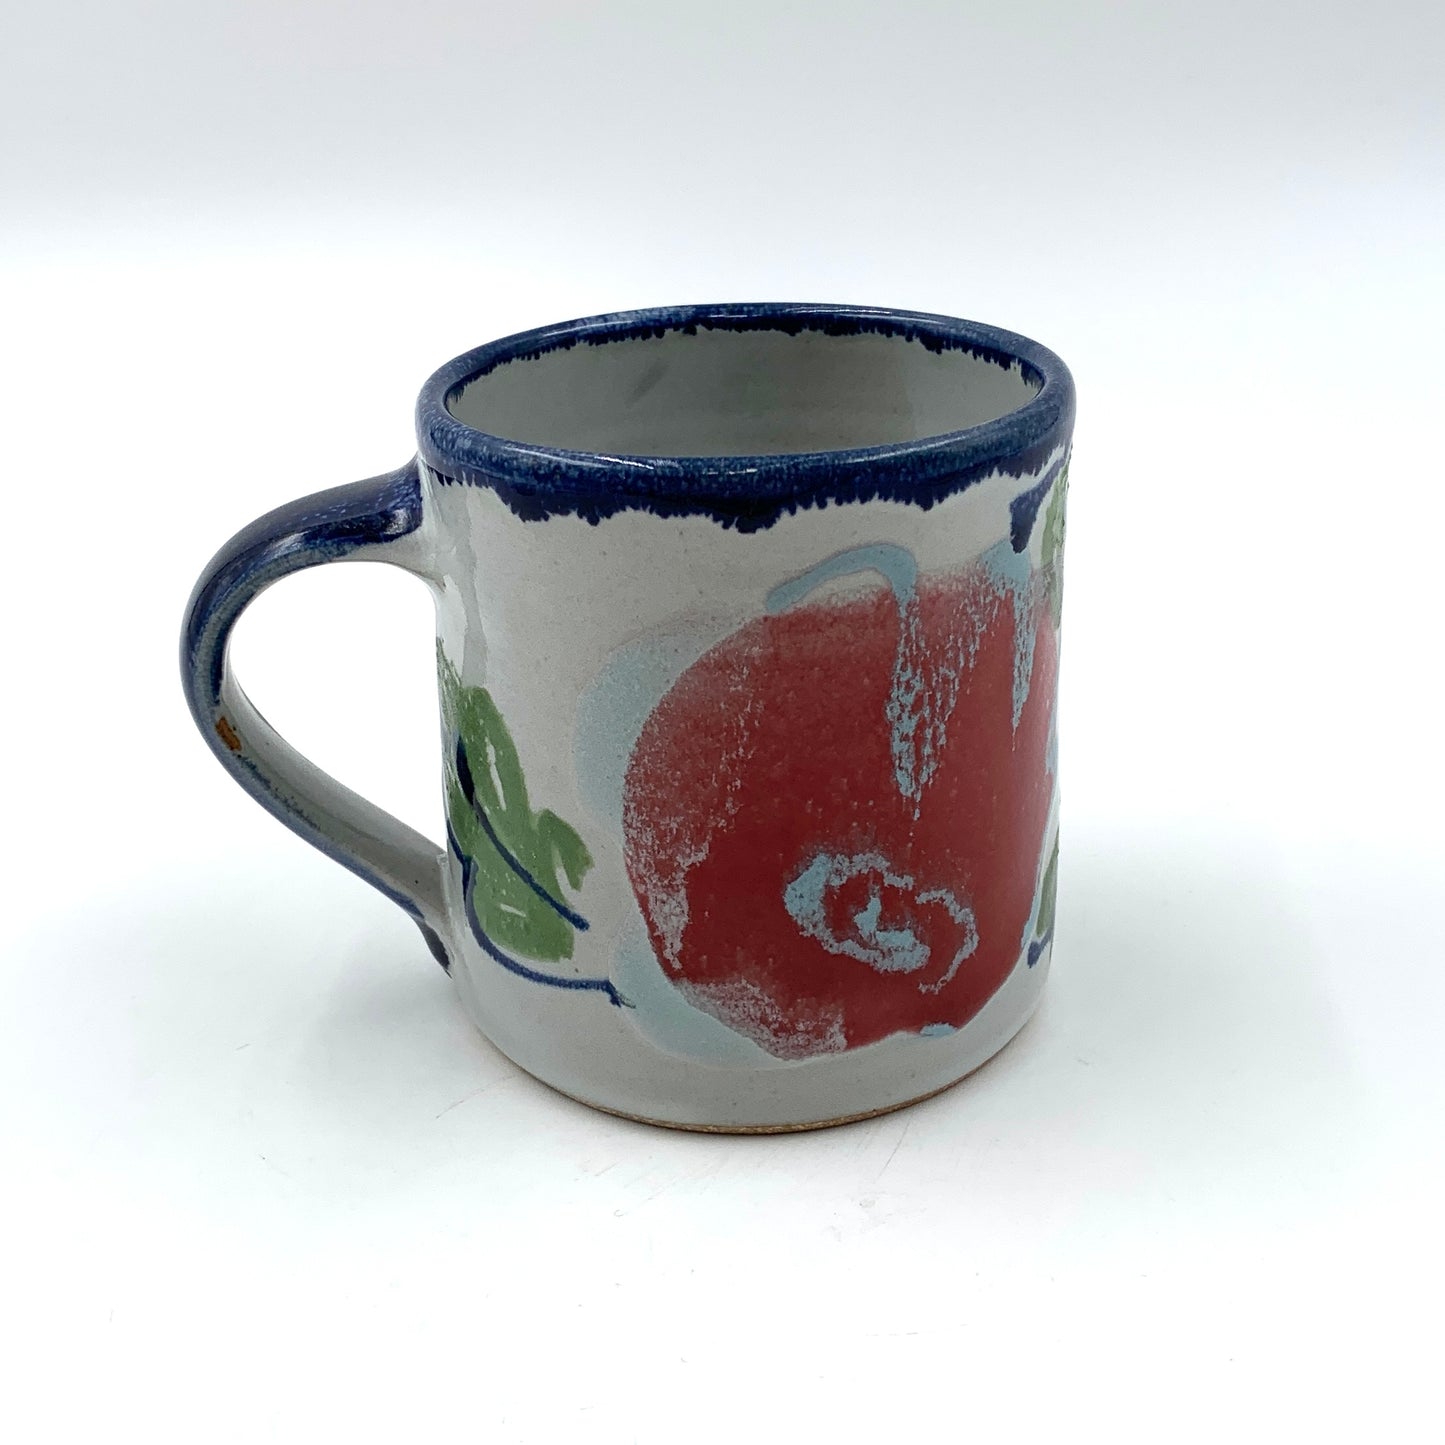 Mug with Fish or Rose Motif